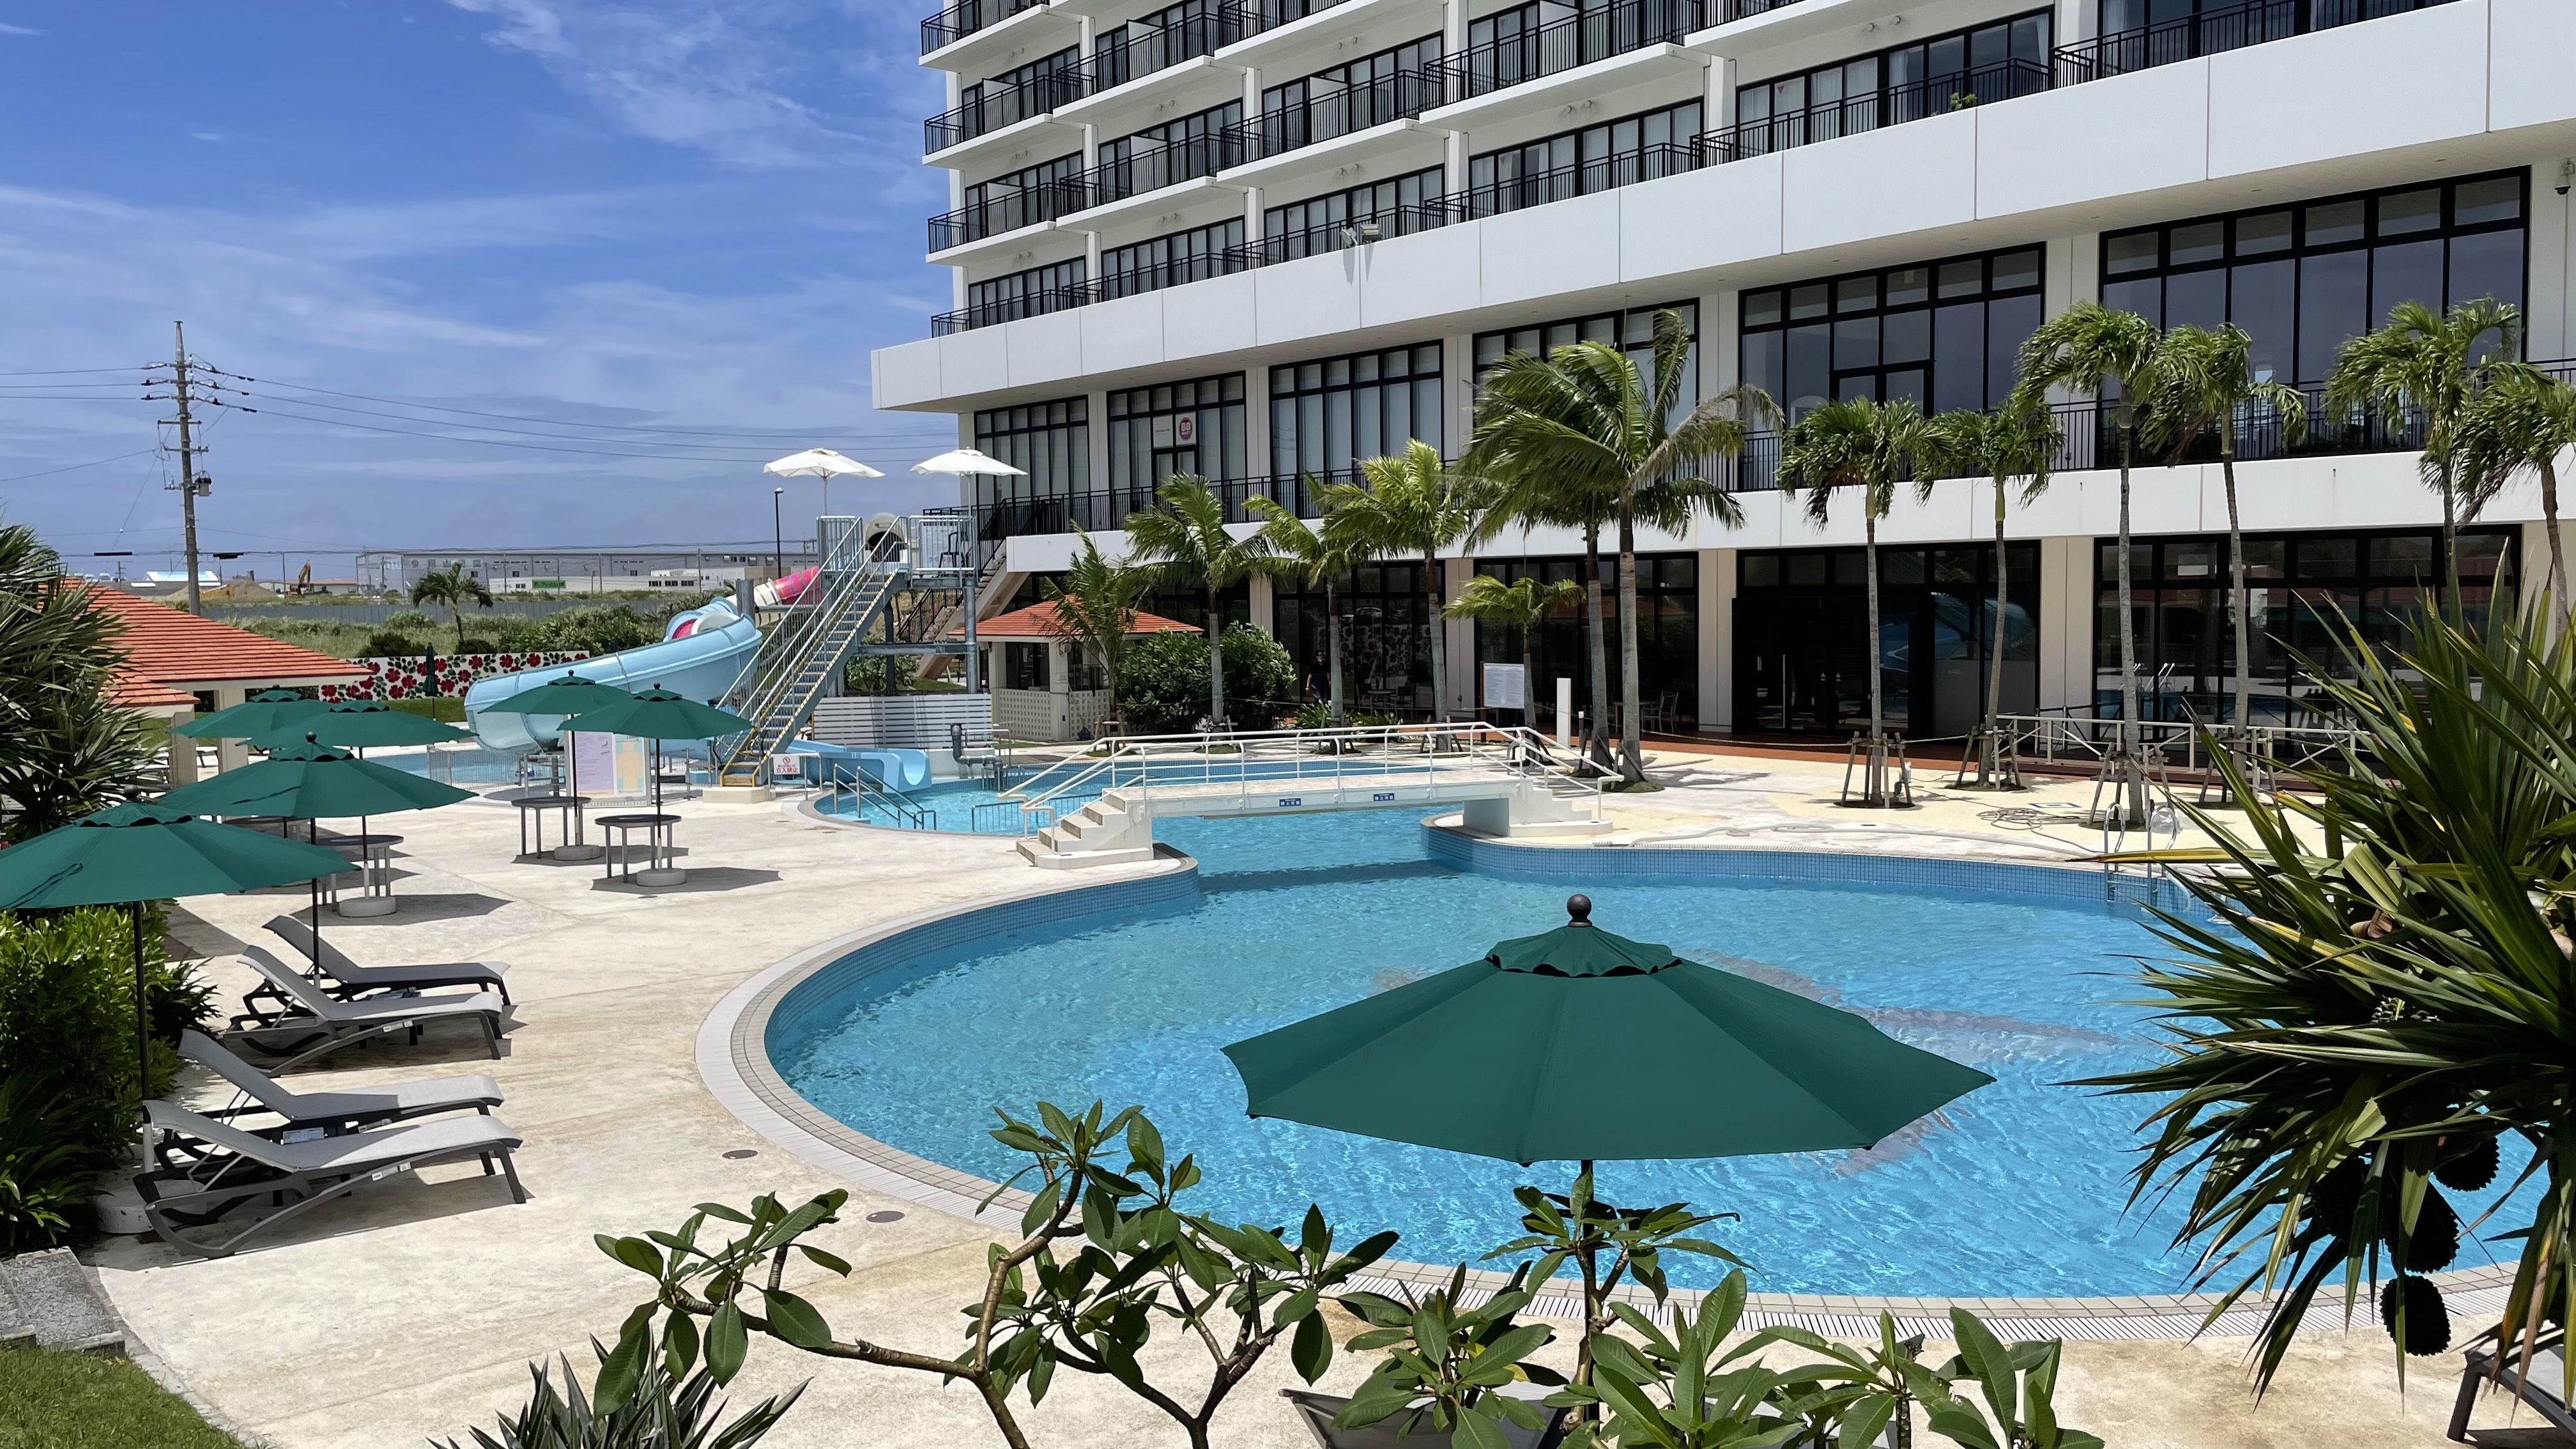 Southern Beach Hotel & Resort Okinawa image